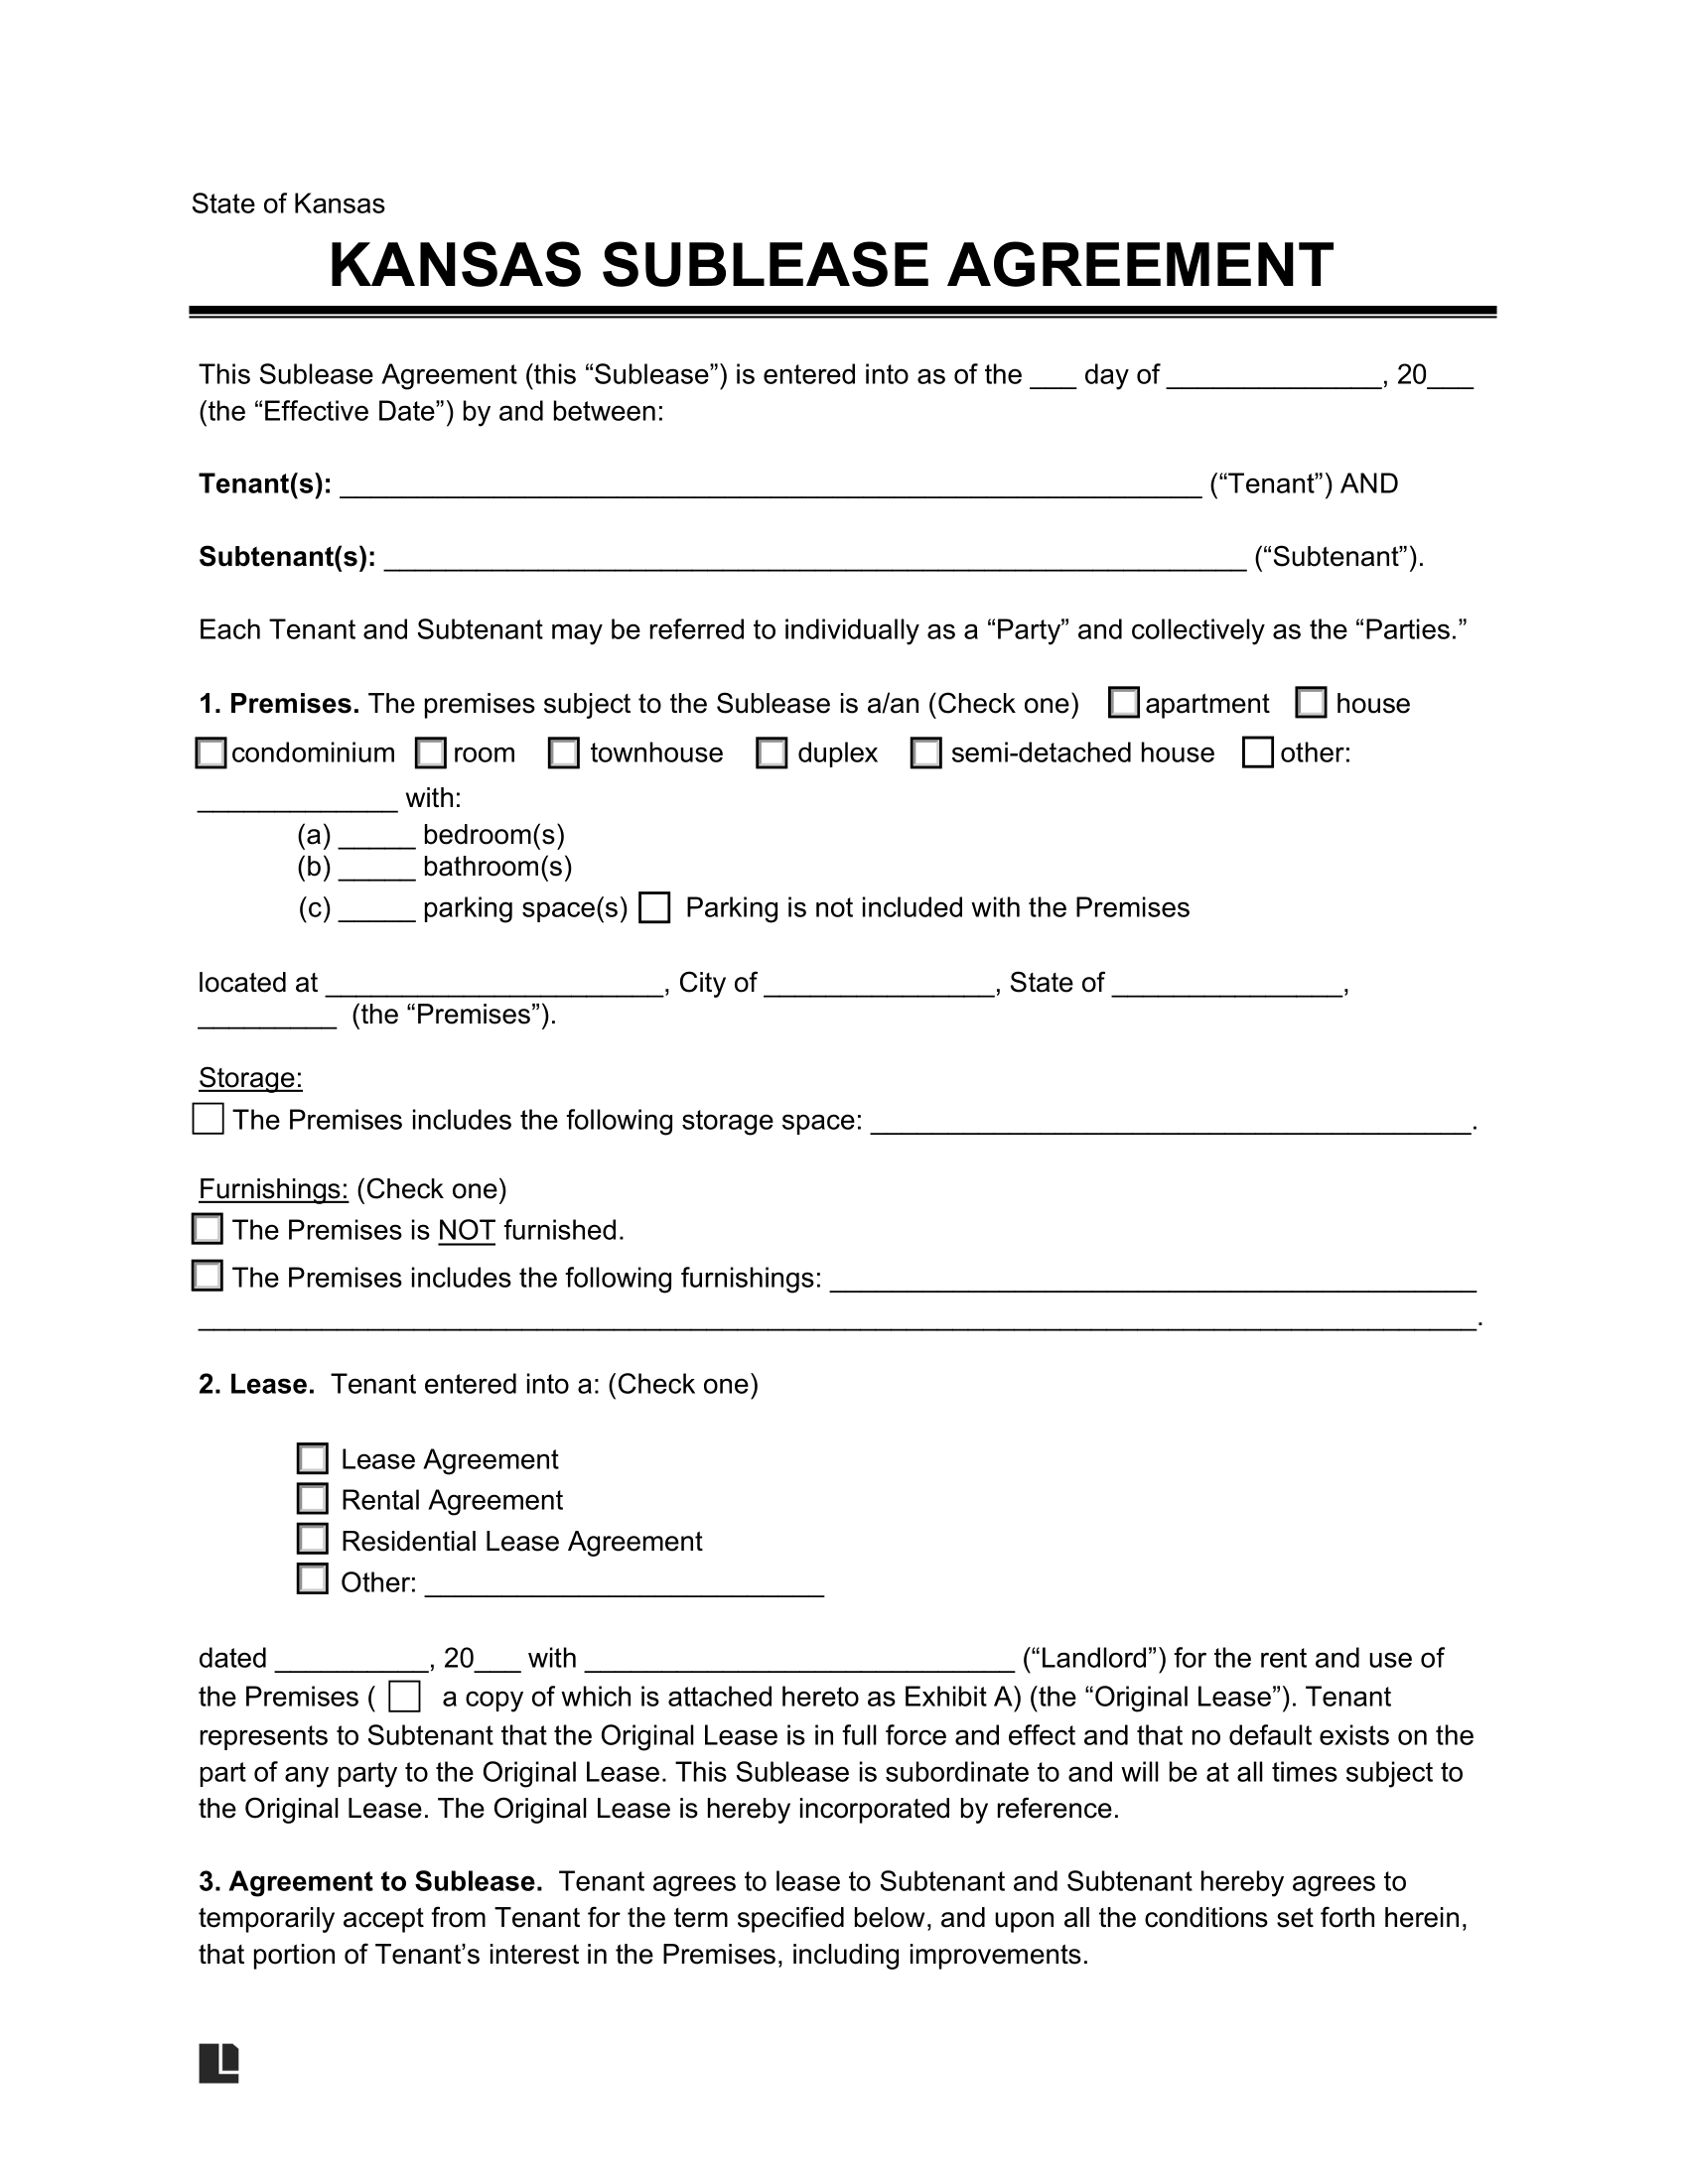 Kansas Sublease Agreement Template